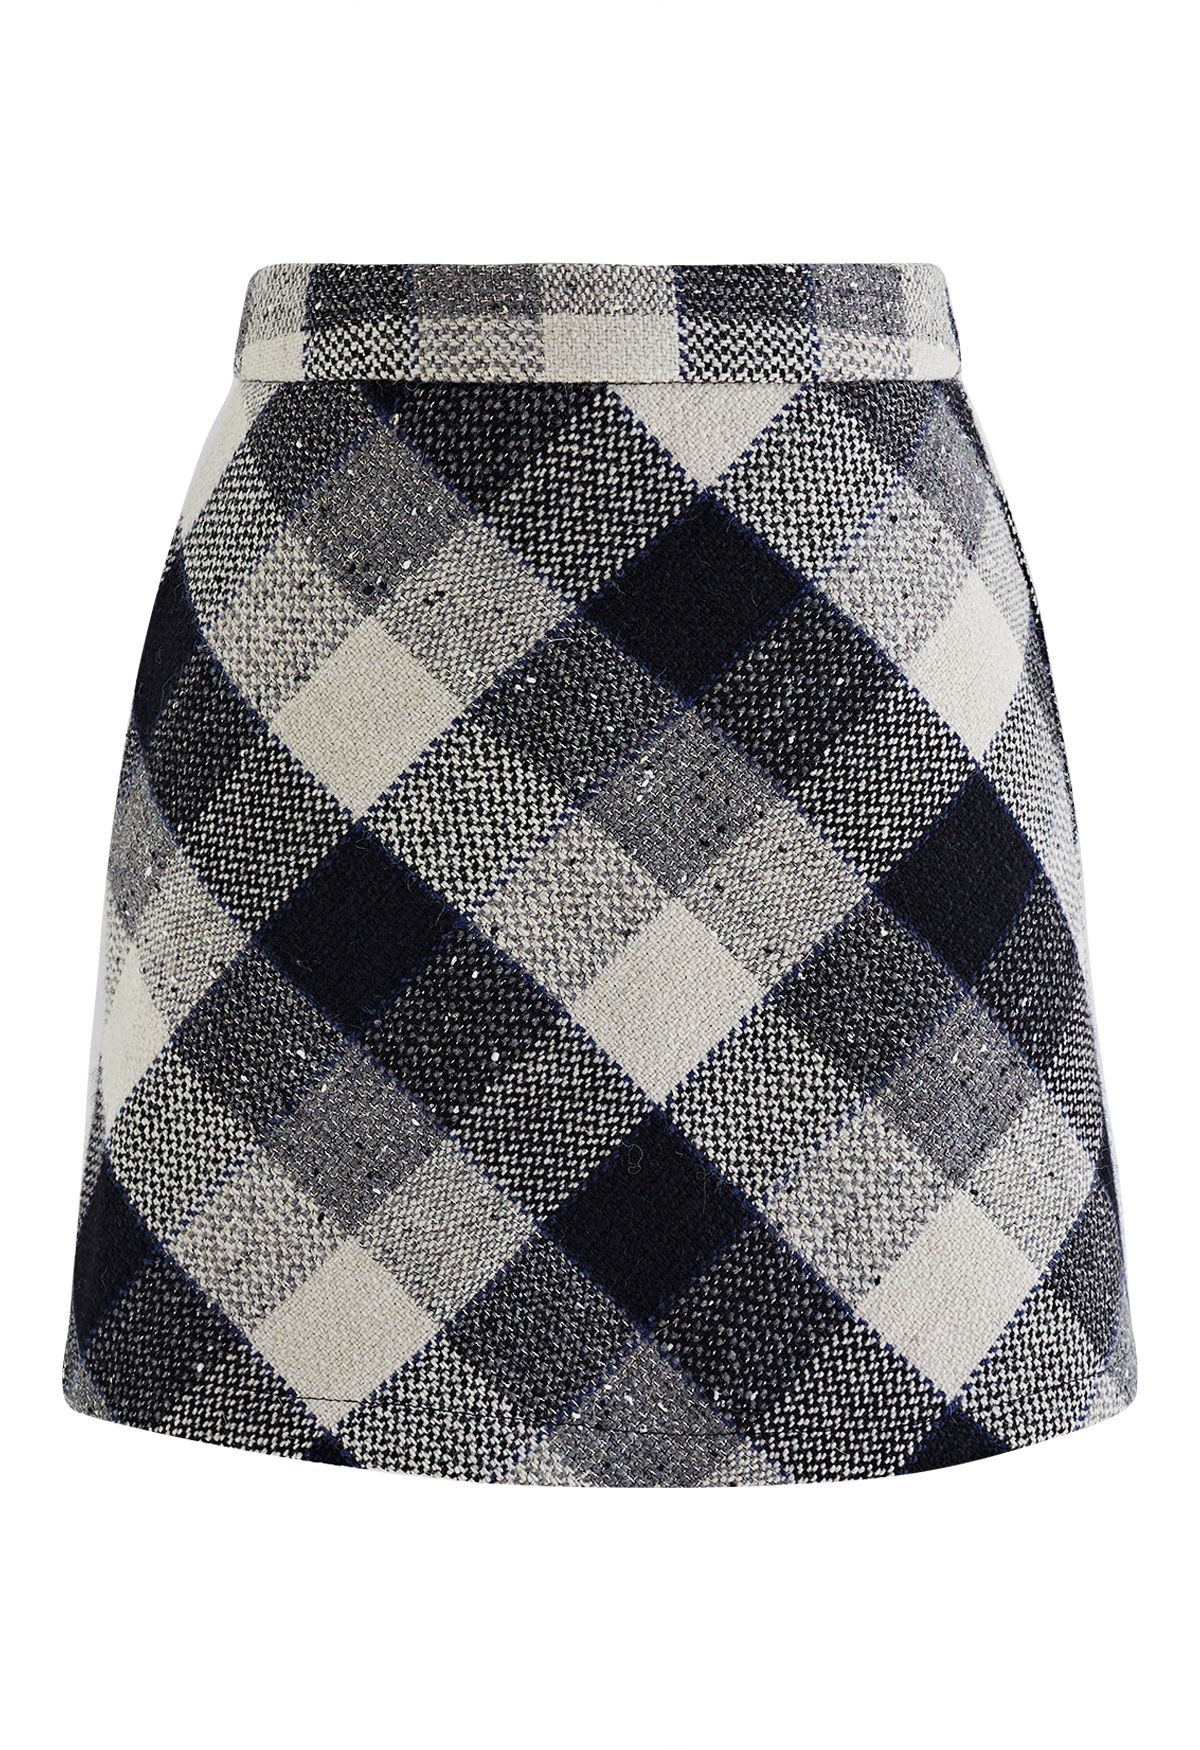 Retro Check Tweed Mini Skirt in Grey